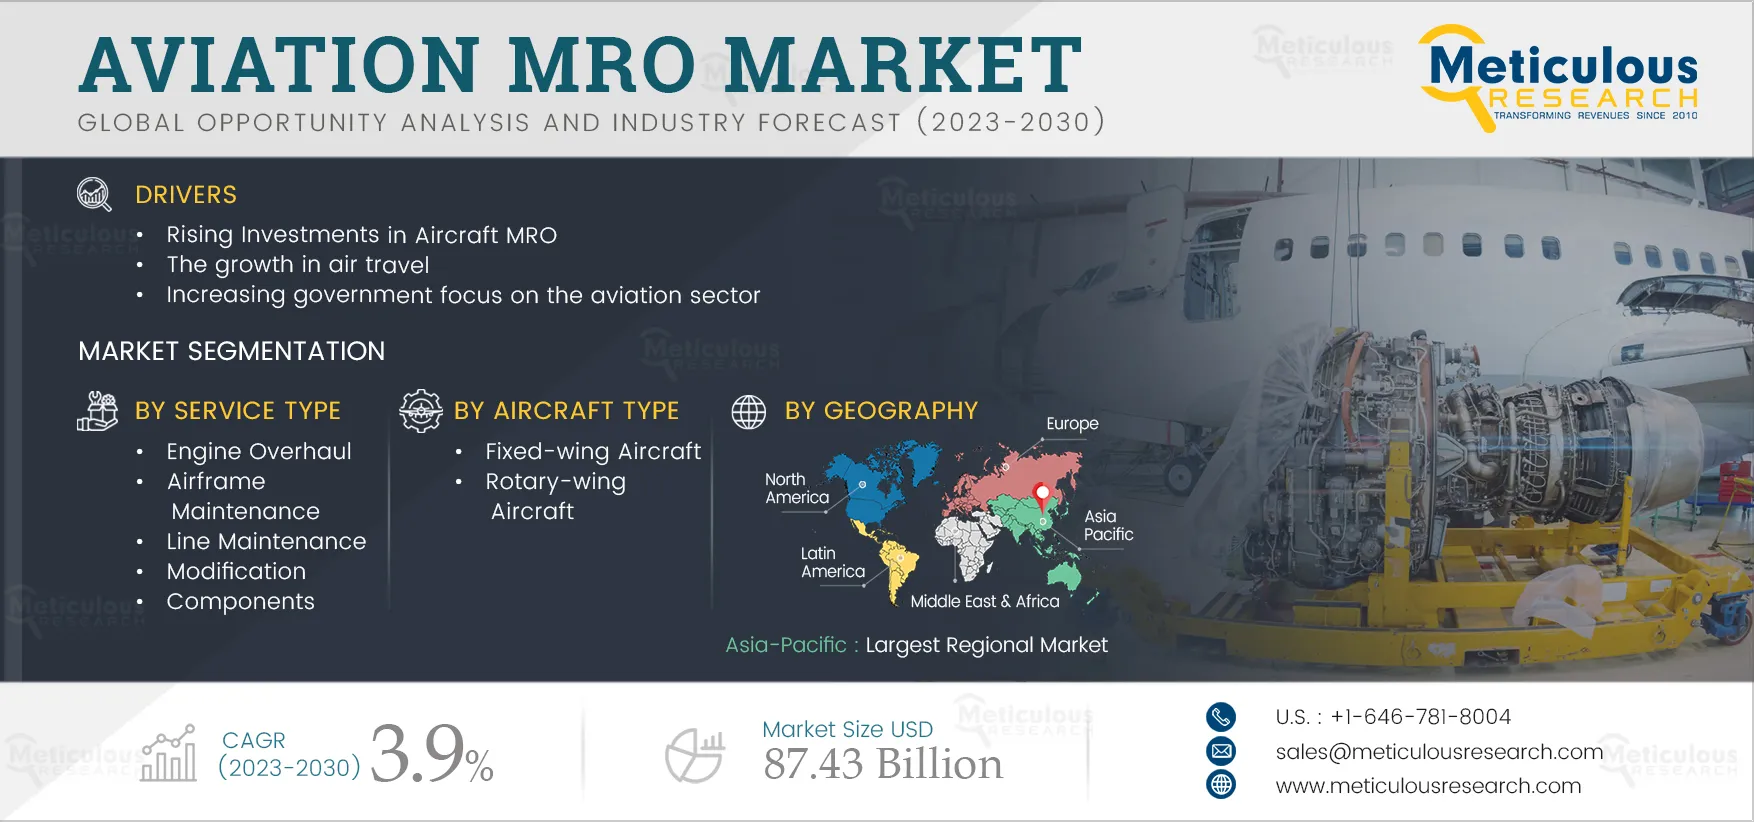 Aviation MRO Market